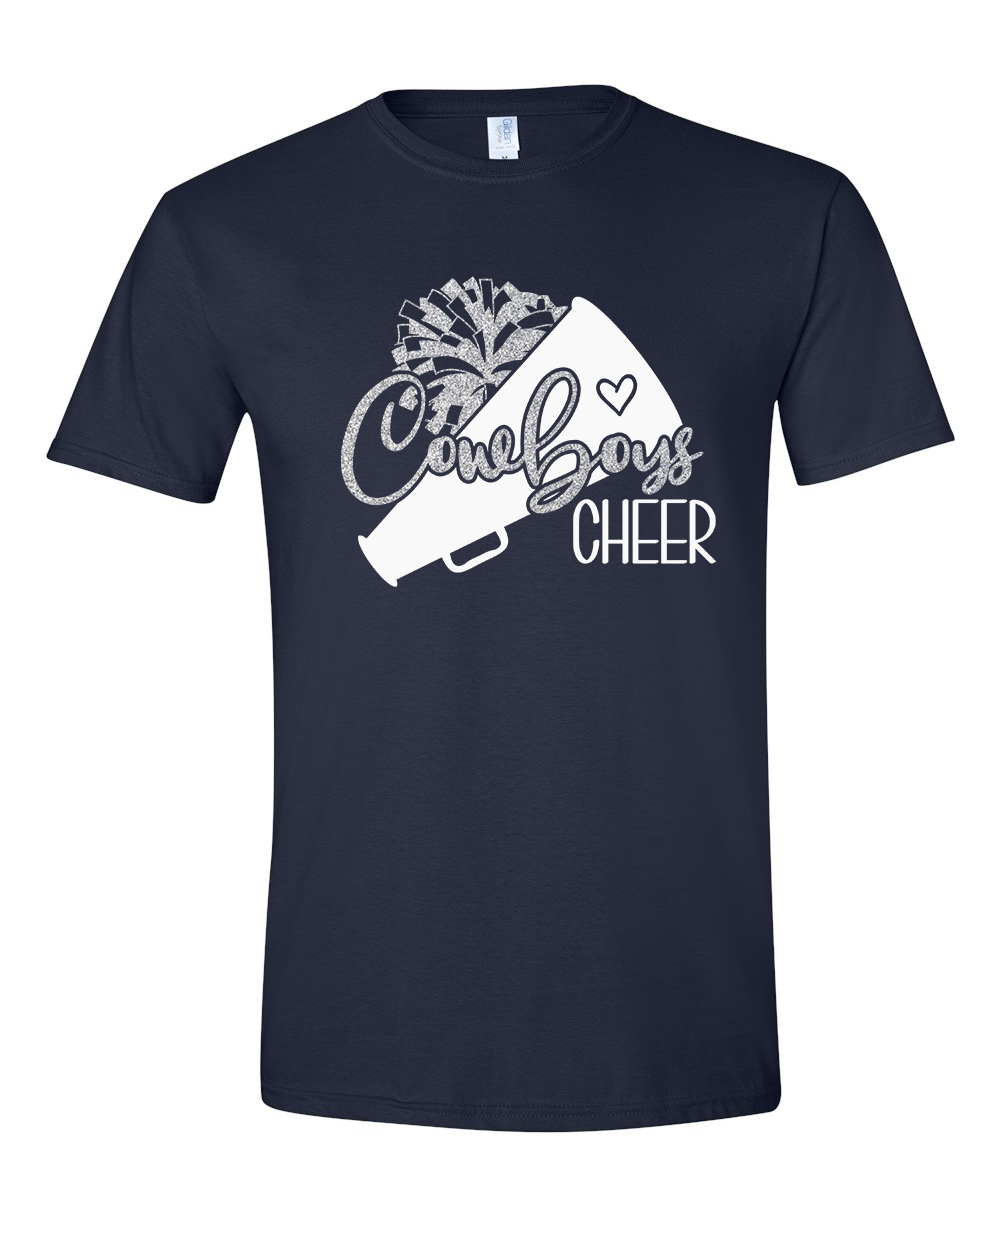 Addison Cowboys Glitter Cheer - T-shirt - YOUTH